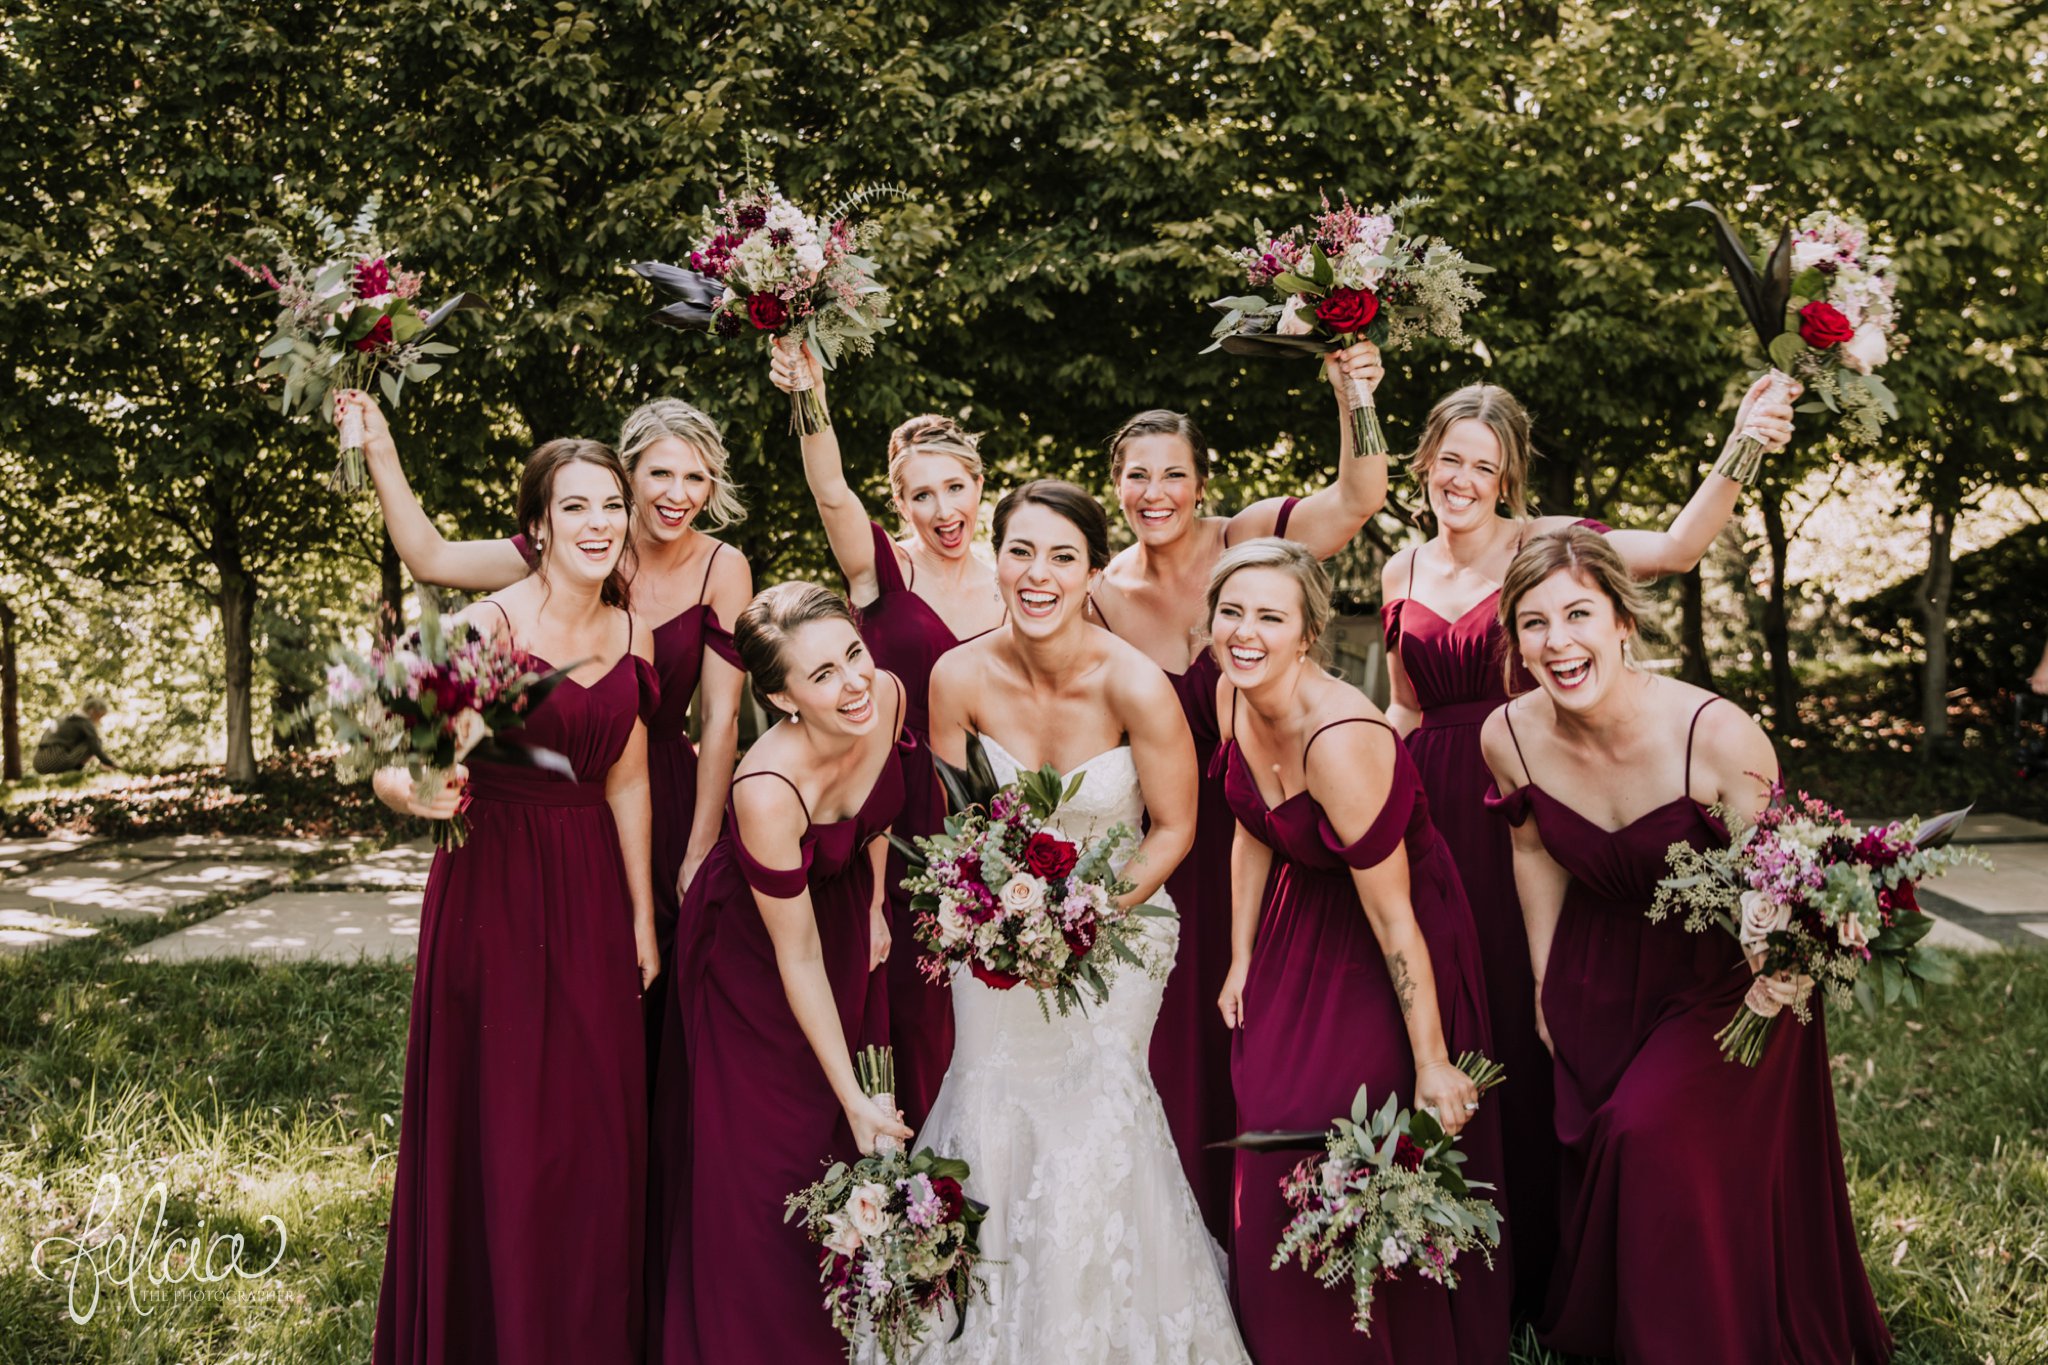 images by feliciathephotographer.com | wedding photographer | kansas city | bridesmaids | portrait | nelson atkins art museum | burgundy dresses | kennedy blue | emily hart | rustic florals | celebration | joy | 